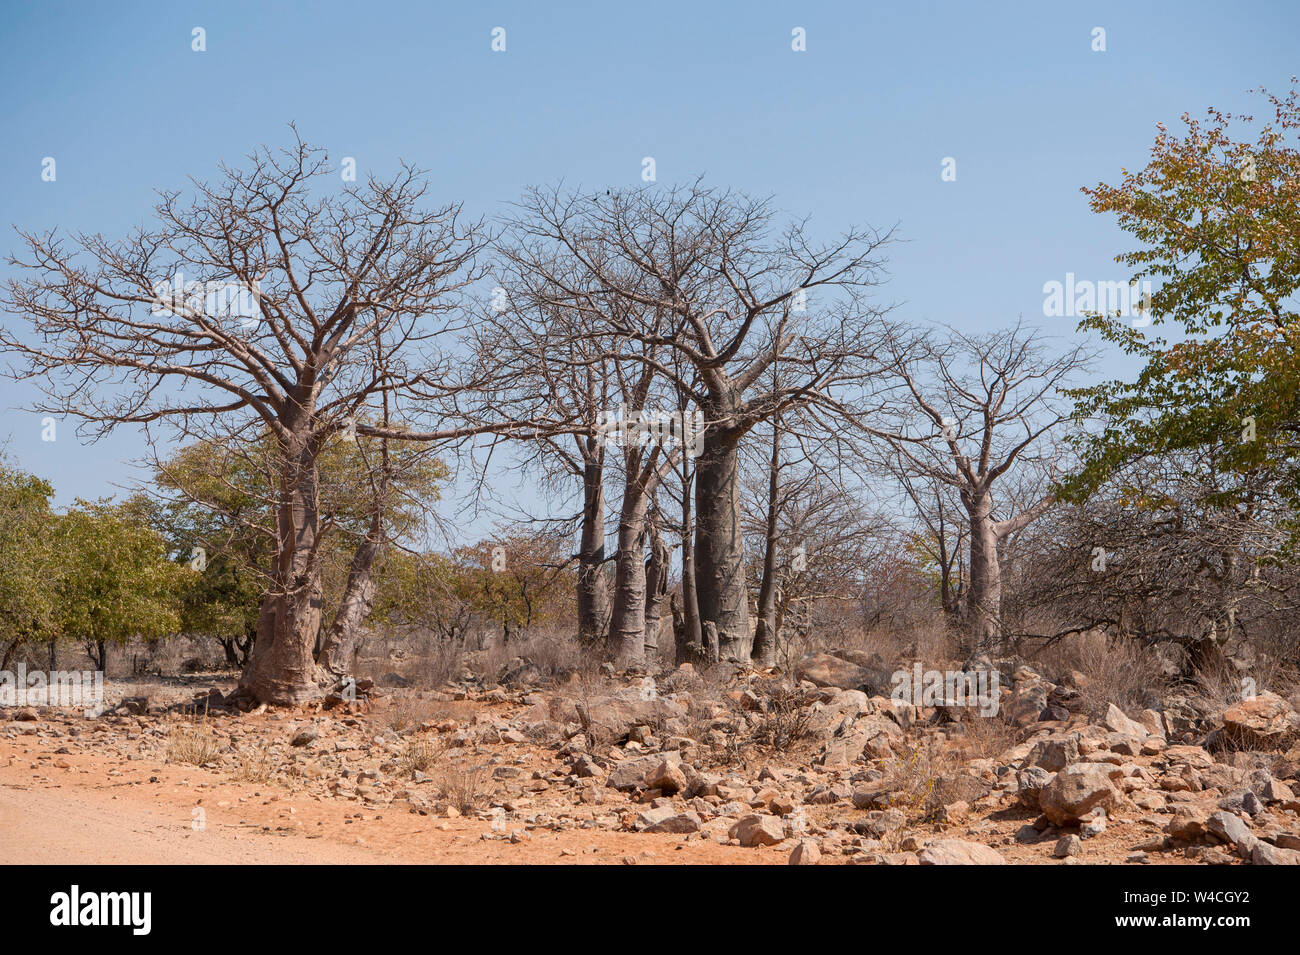 African Baobab (Adansonia digitata). Fotografato a fiume Kunene Cunene (Fiume), il confine tra Angola e Namibia, Sud-ovest Africa Foto Stock